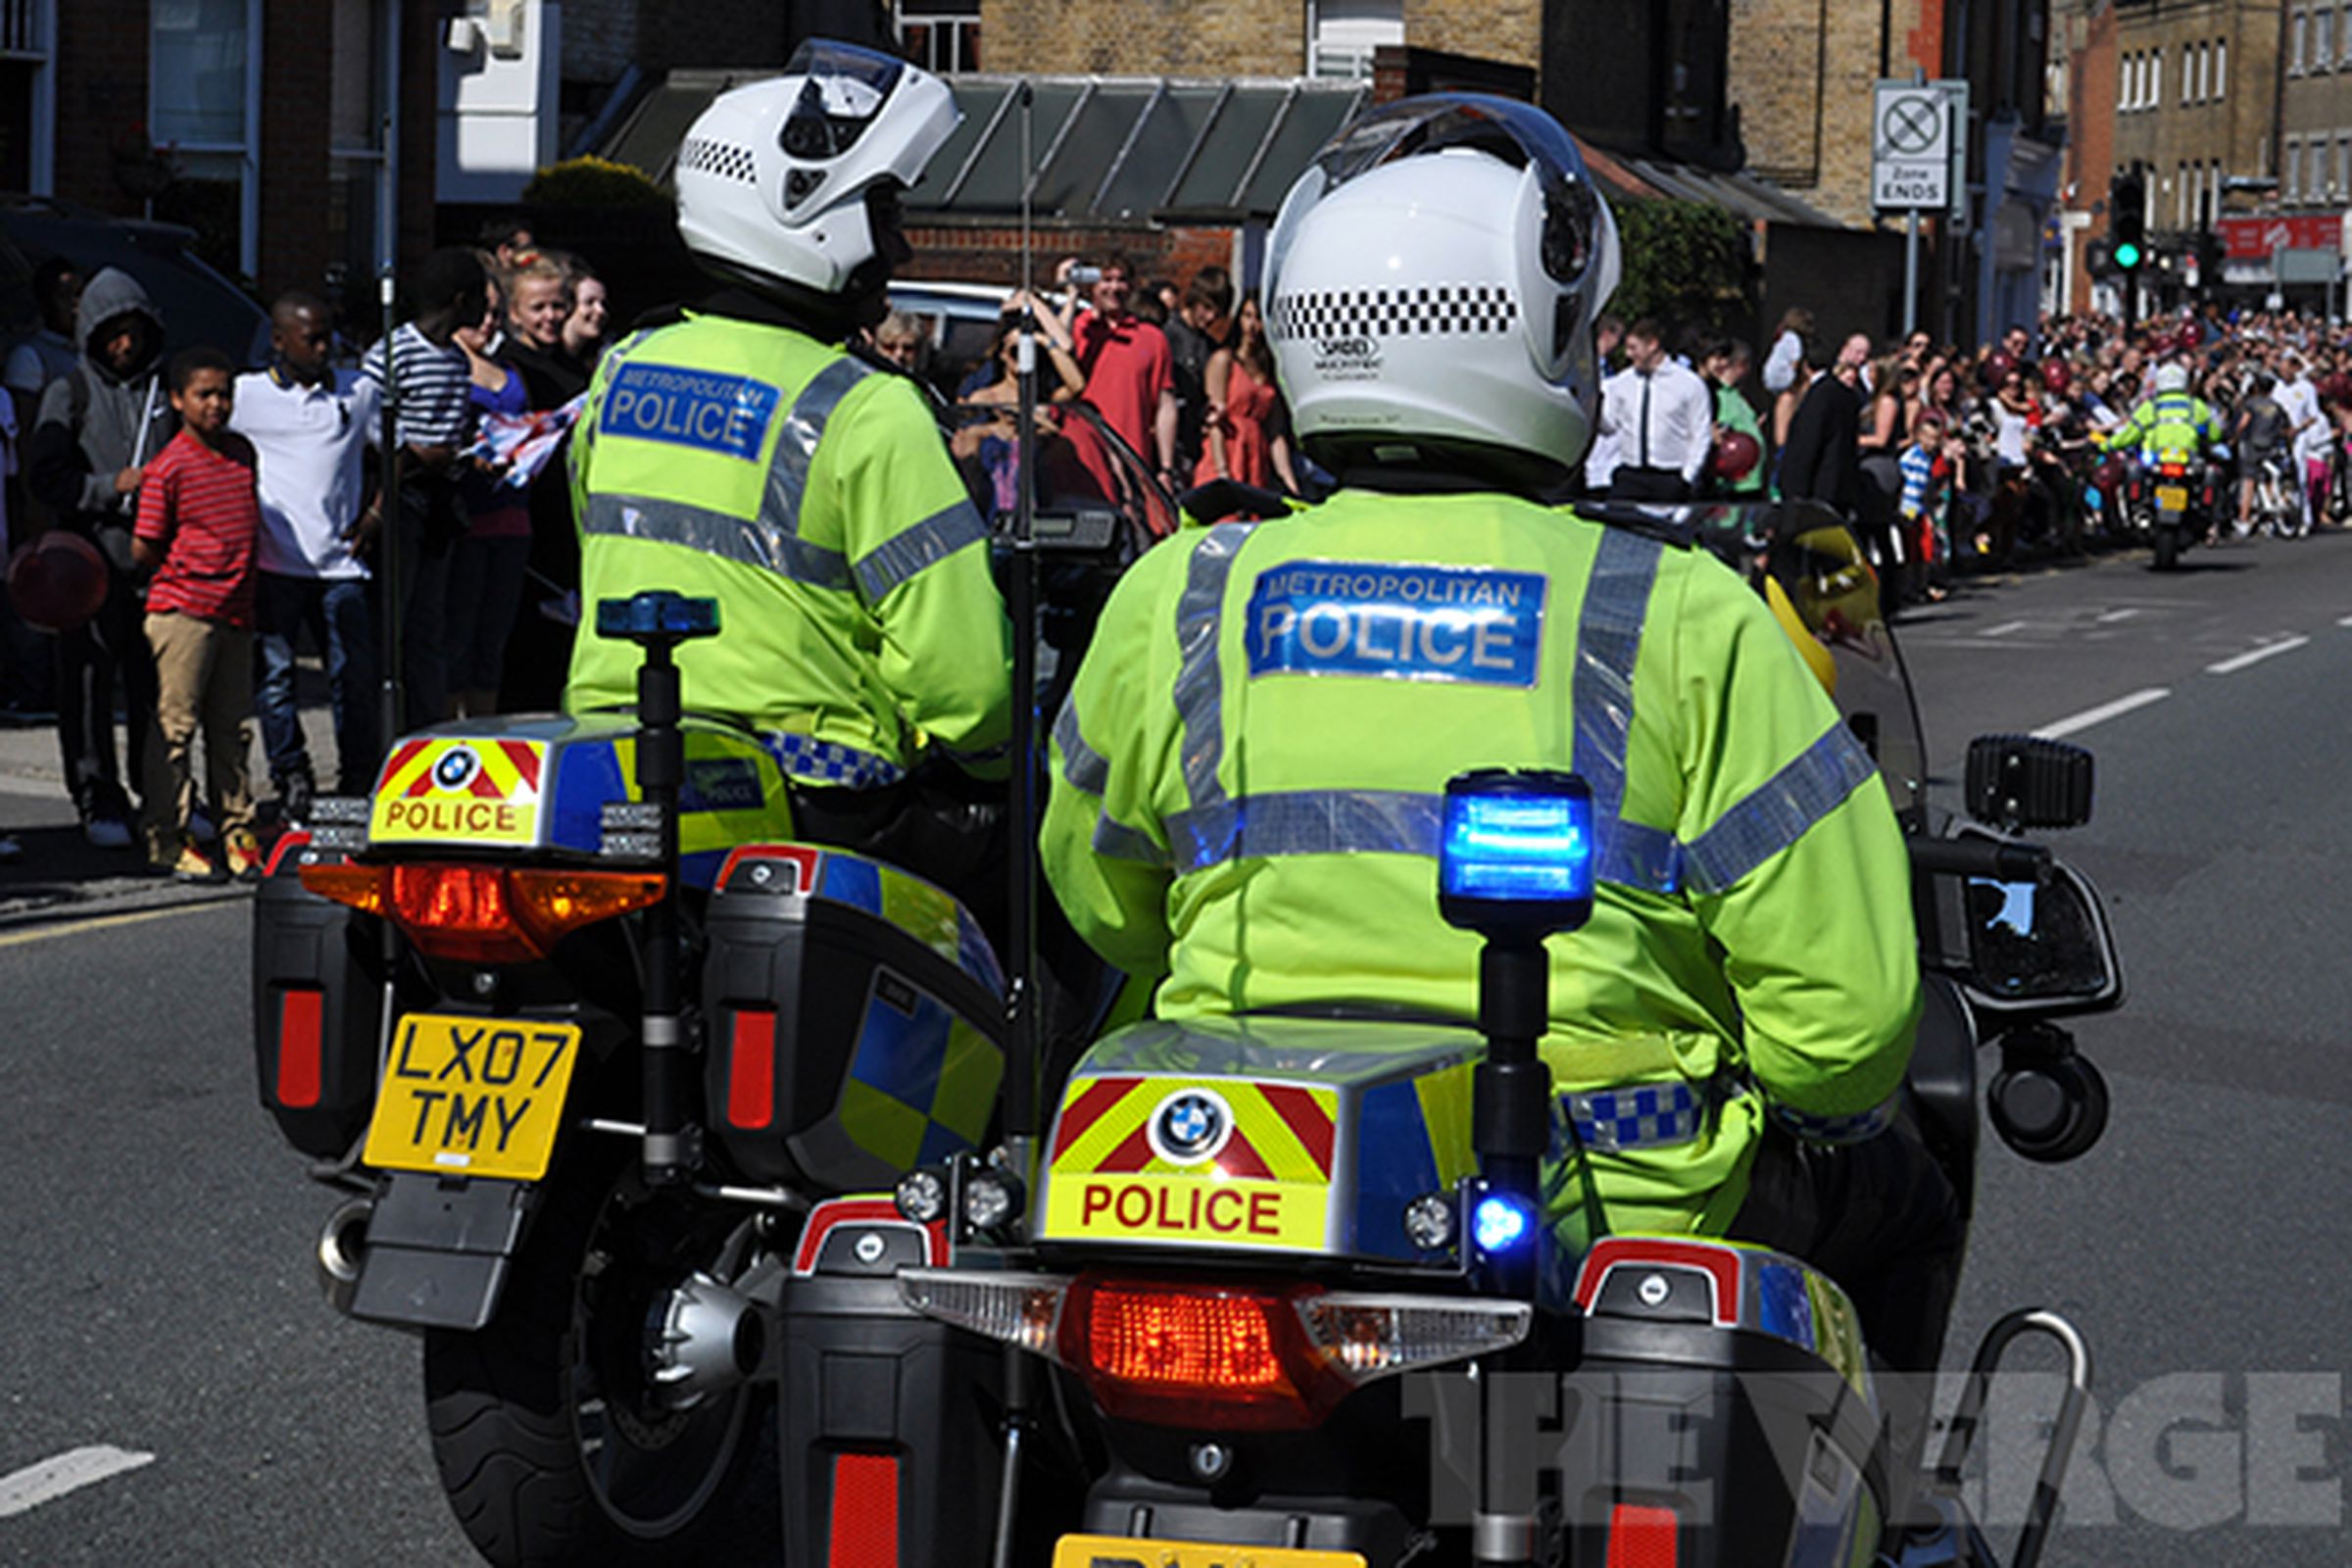 London 2012 Olympics police bike stock